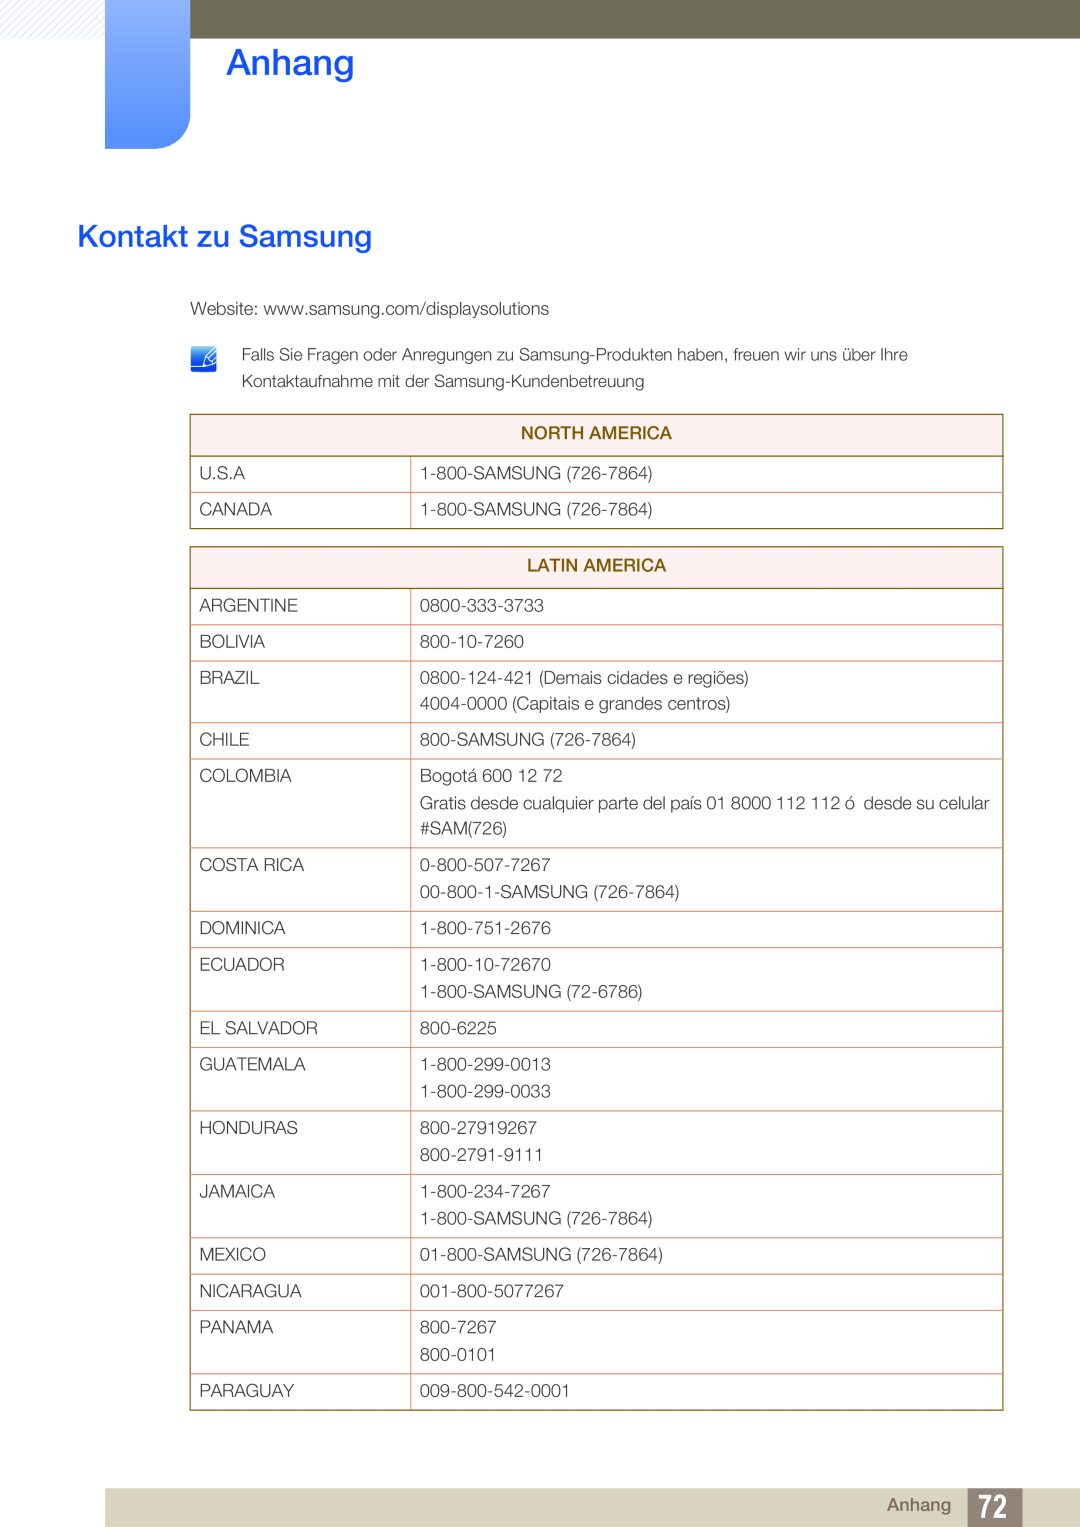 Samsung LF-NXN2N/EN, LF00FNXPFBZXEN manual Anhang, Kontakt zu Samsung, North America, Latin America 